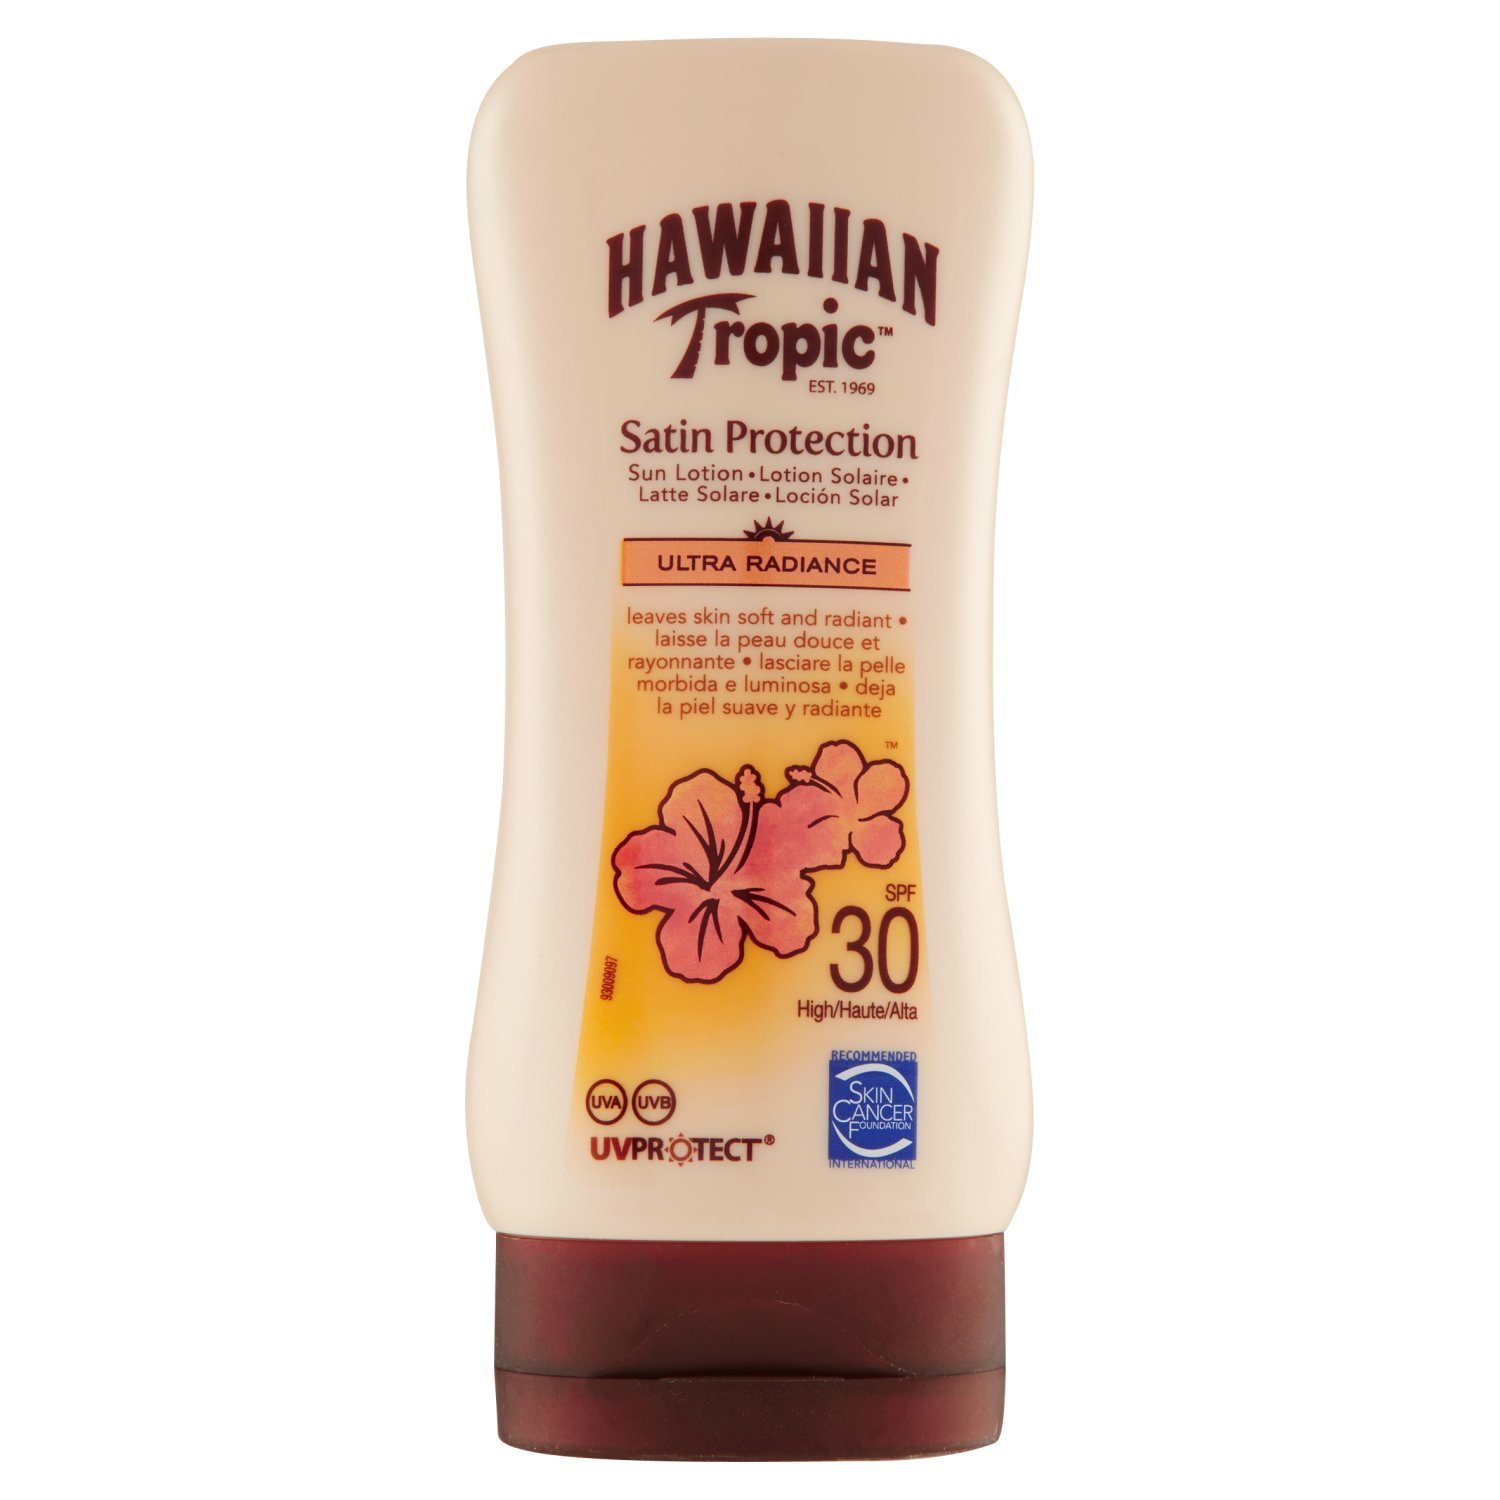 Hawaiian Tropic Satin Protection Sun Lotion Sonnencreme LSF 30, 180 ml, 1 St